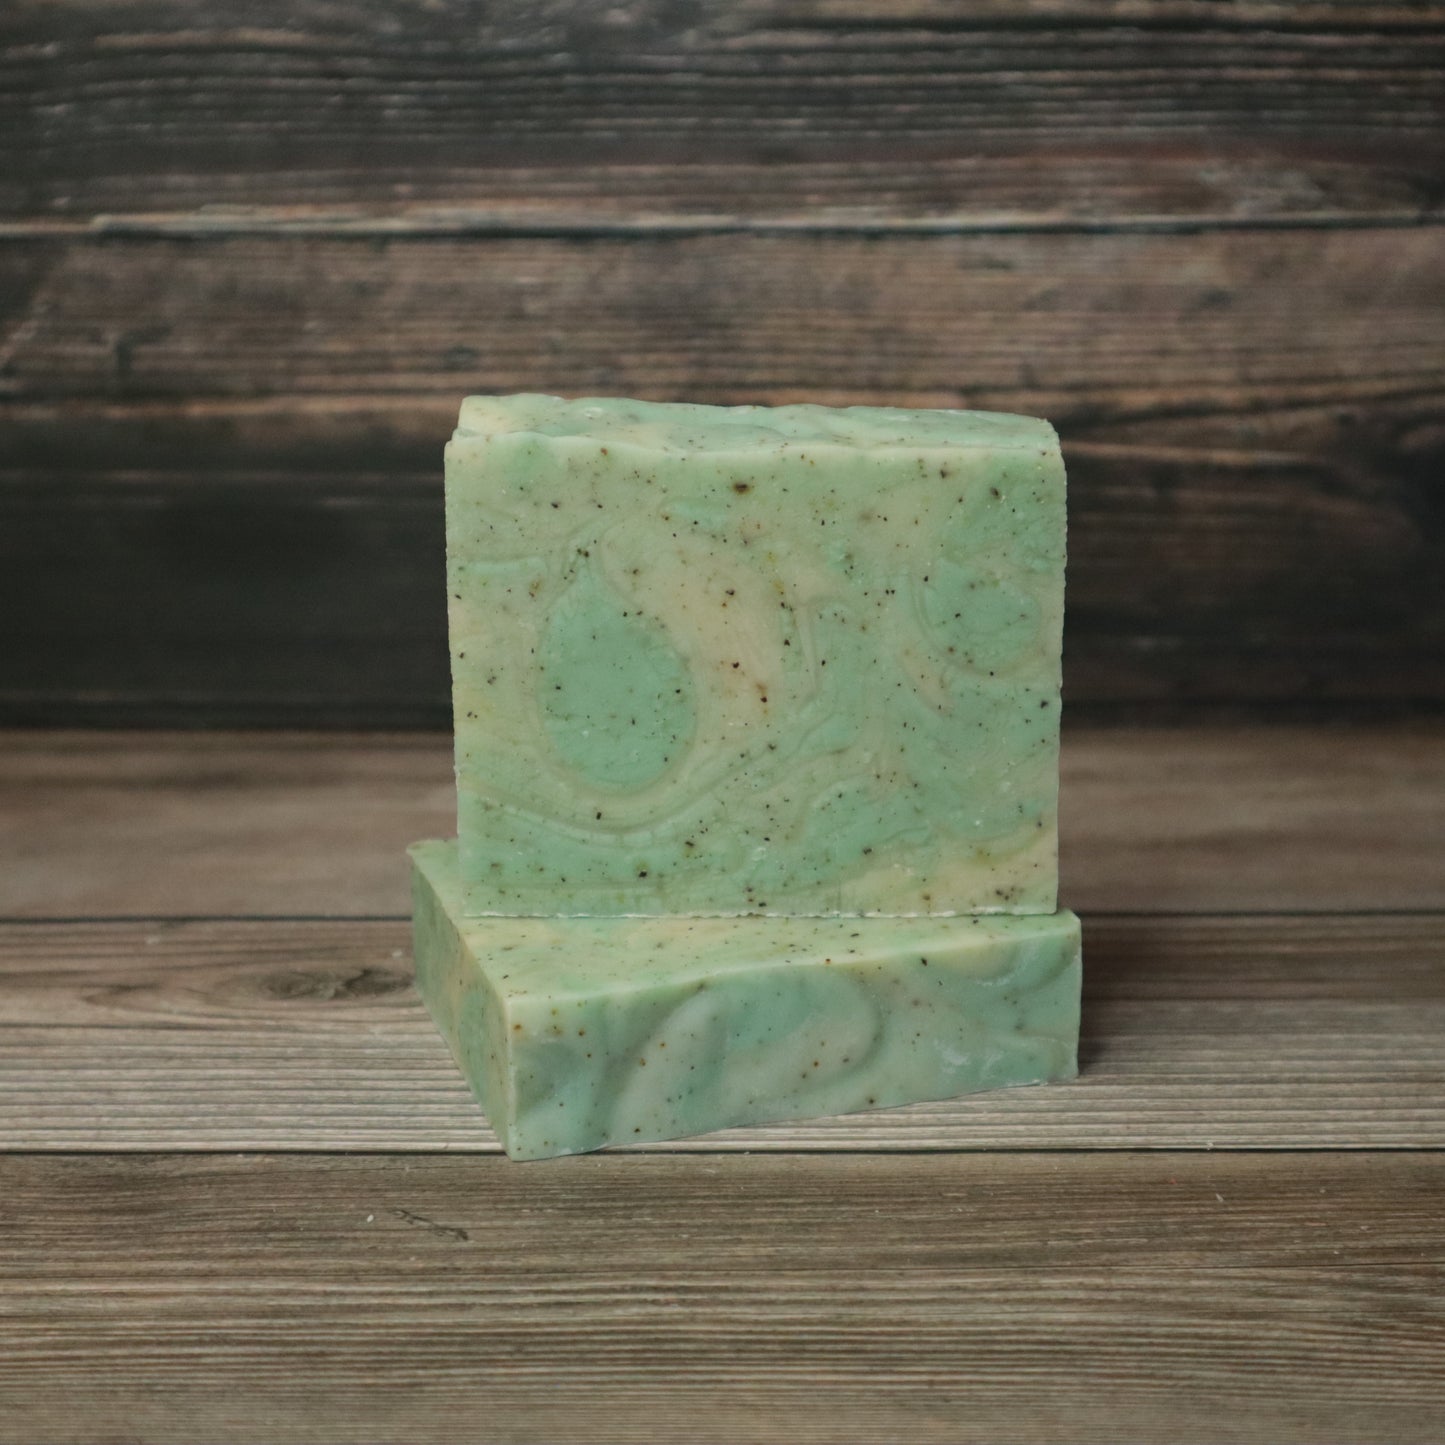 Green Tea & Peppermint Soap with Aloe